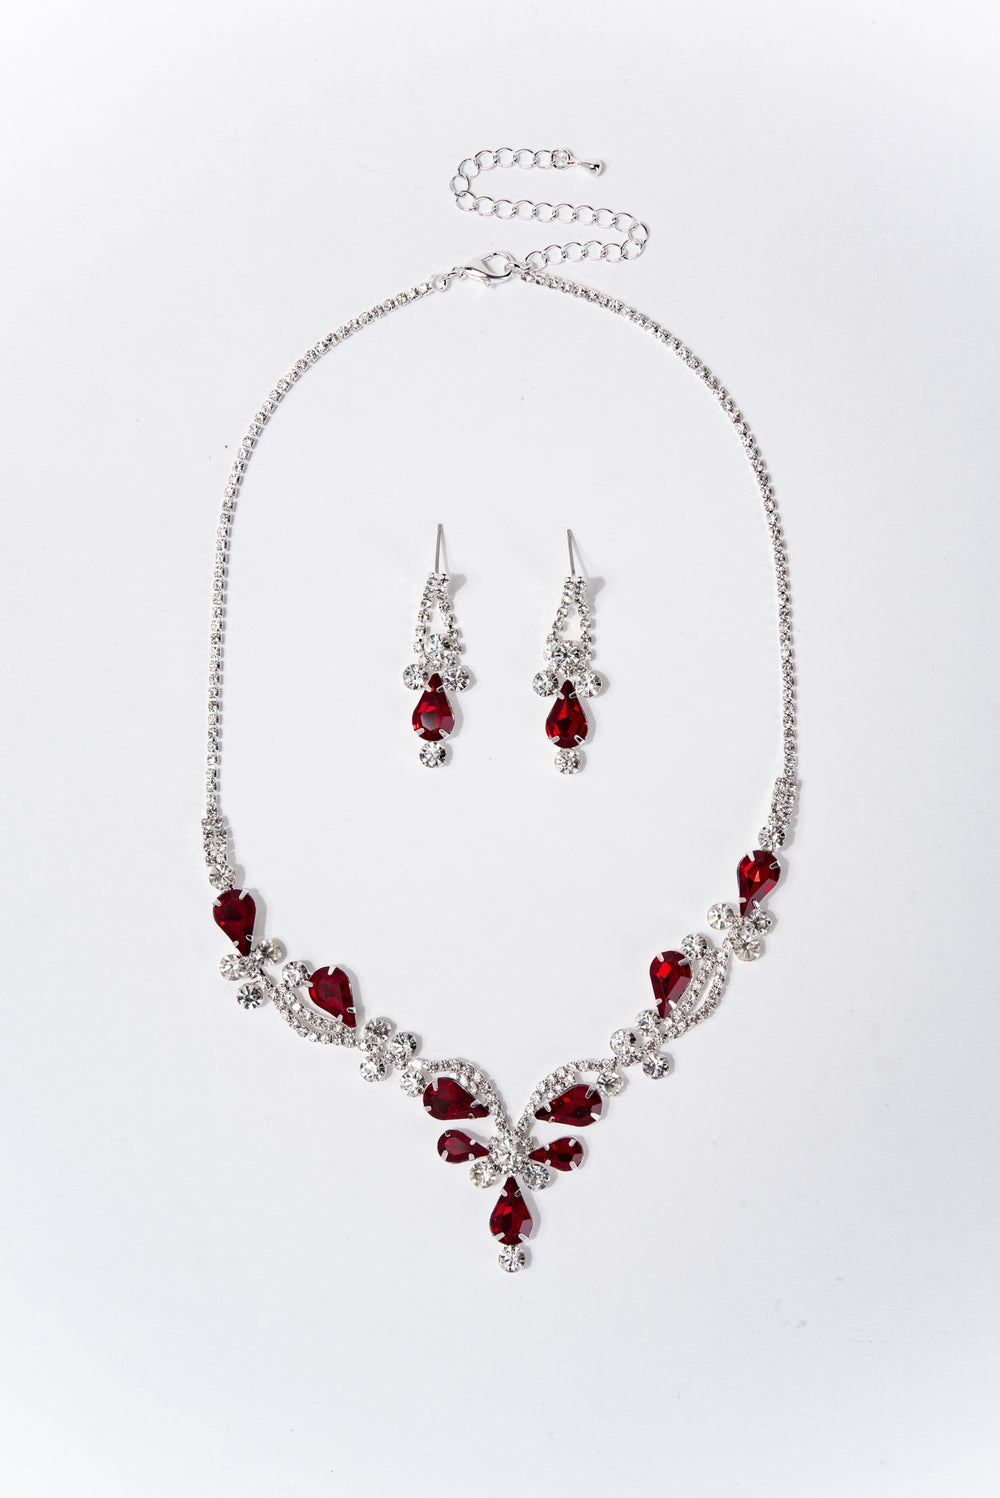 Autumn Elegant Rhinestone Statement Necklace Set - Red